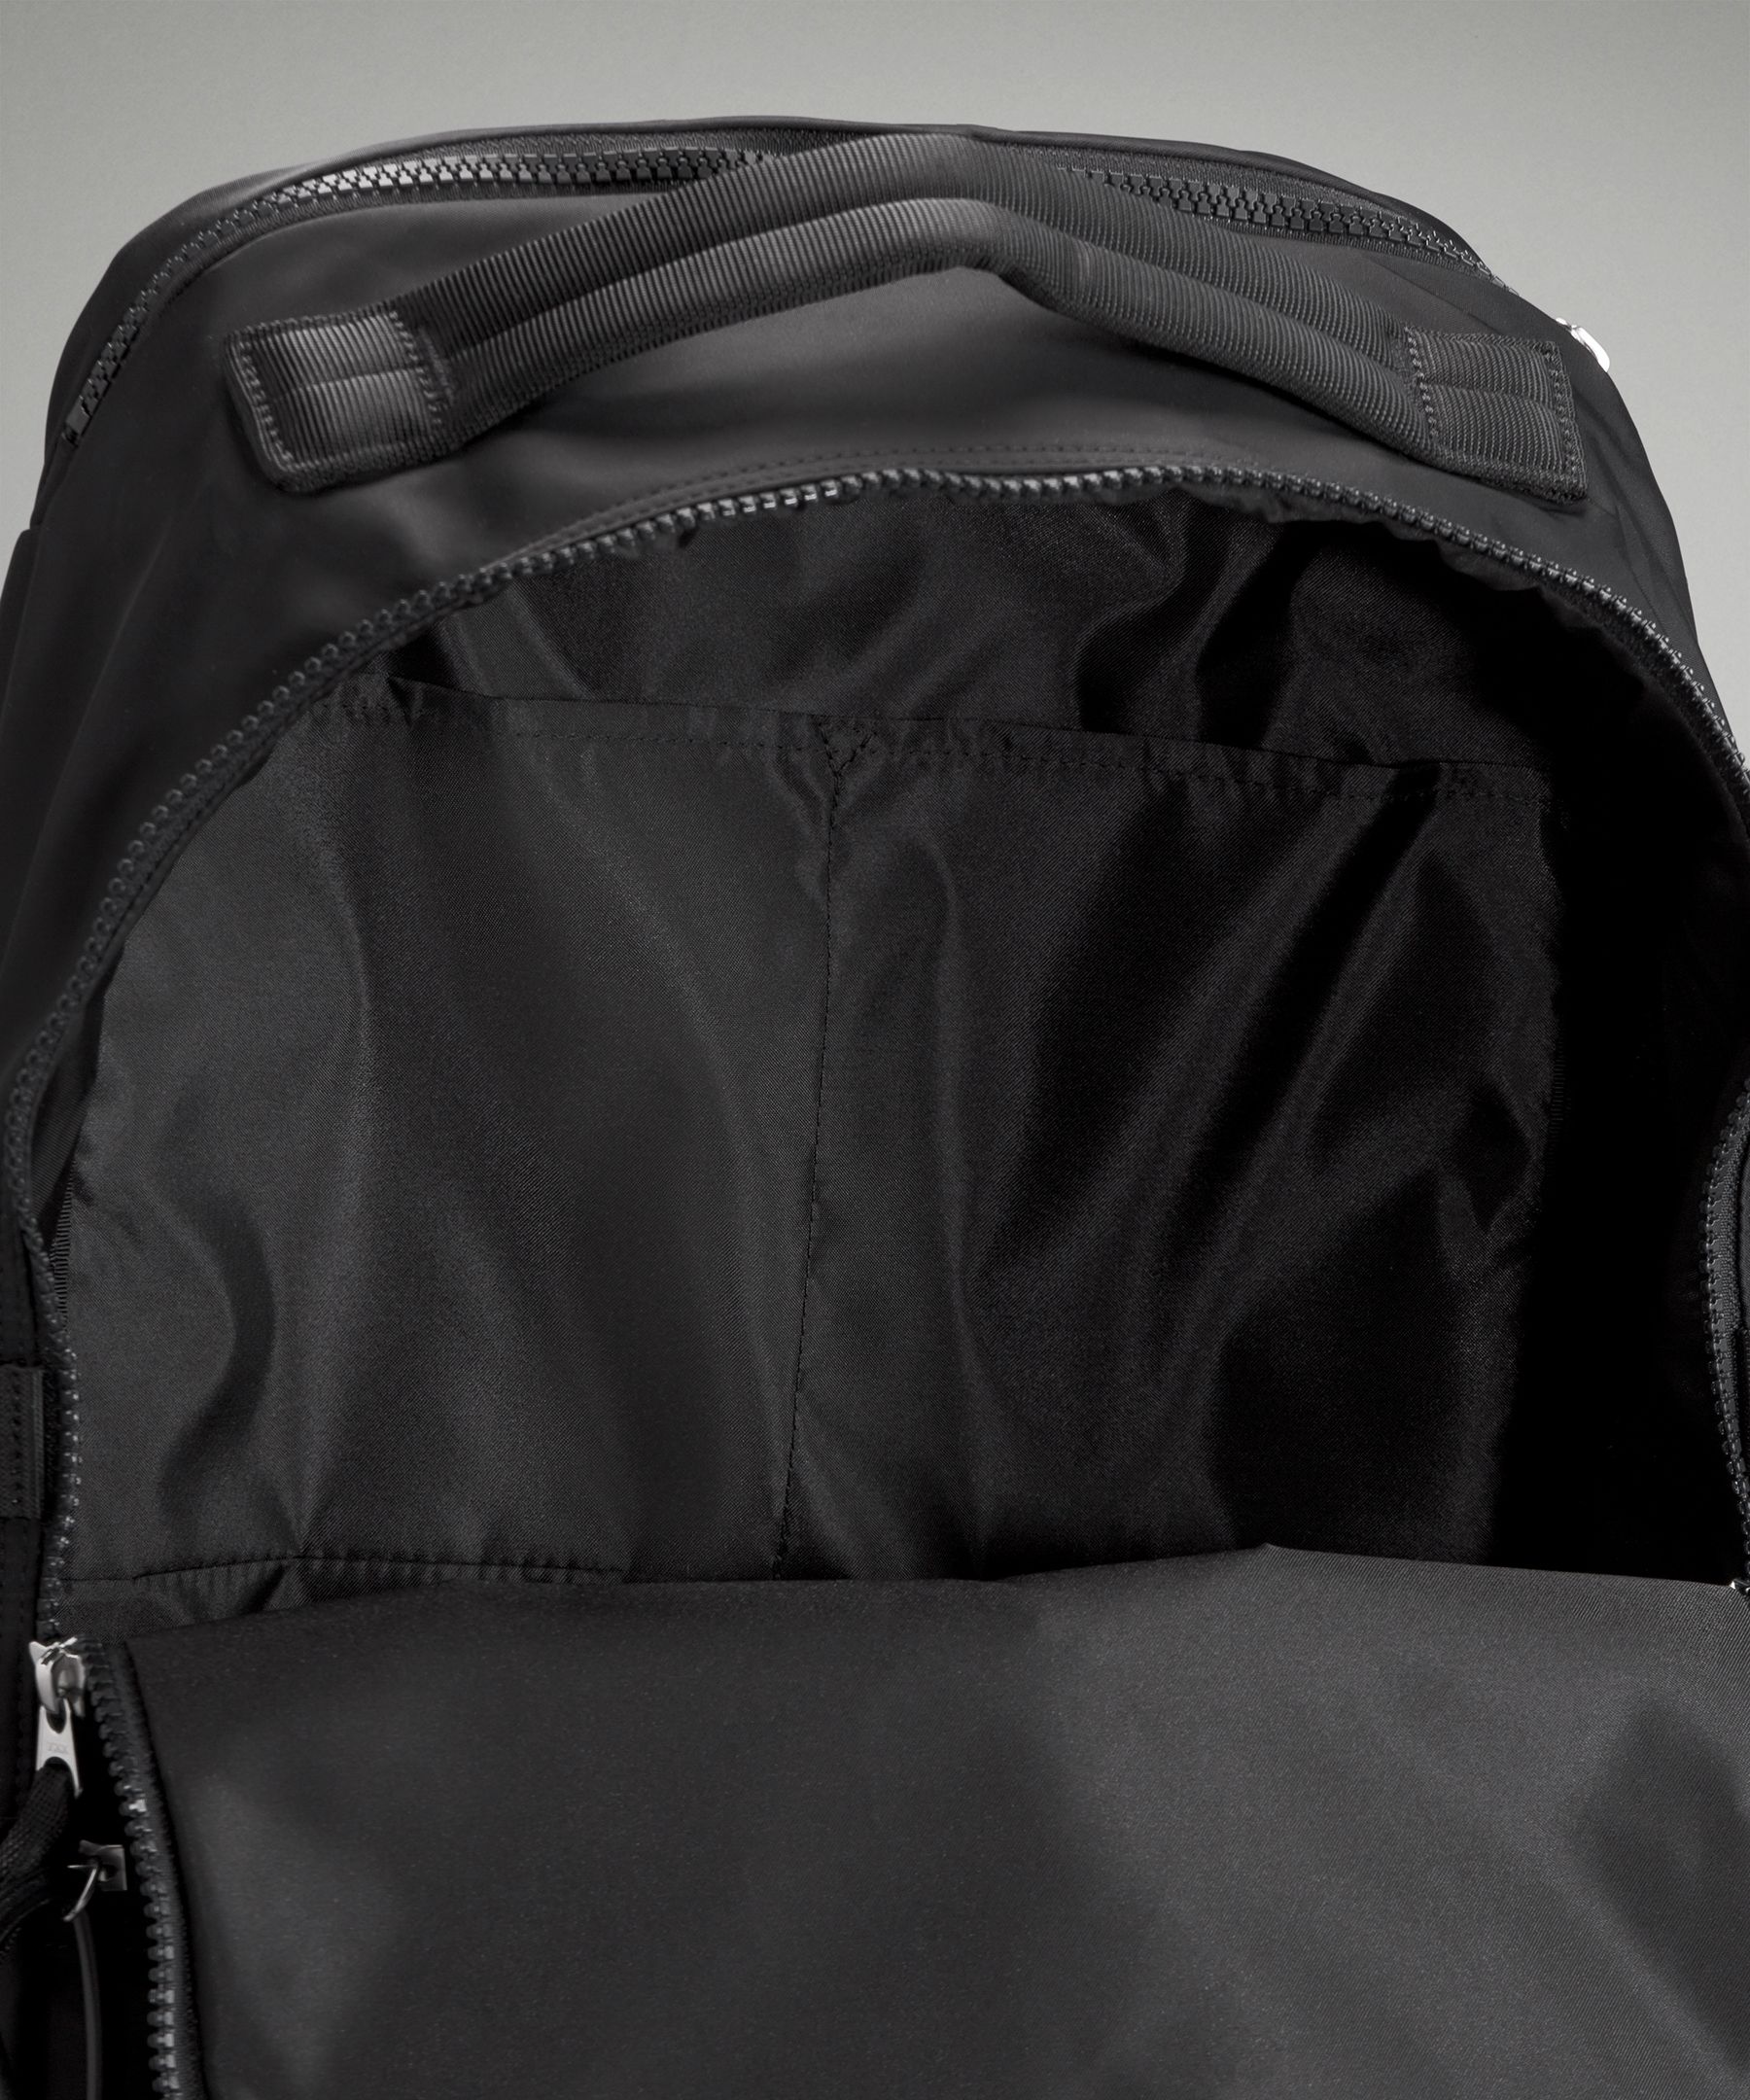 New Crew Backpack 22L | Unisex Bags,Purses,Wallets | lululemon